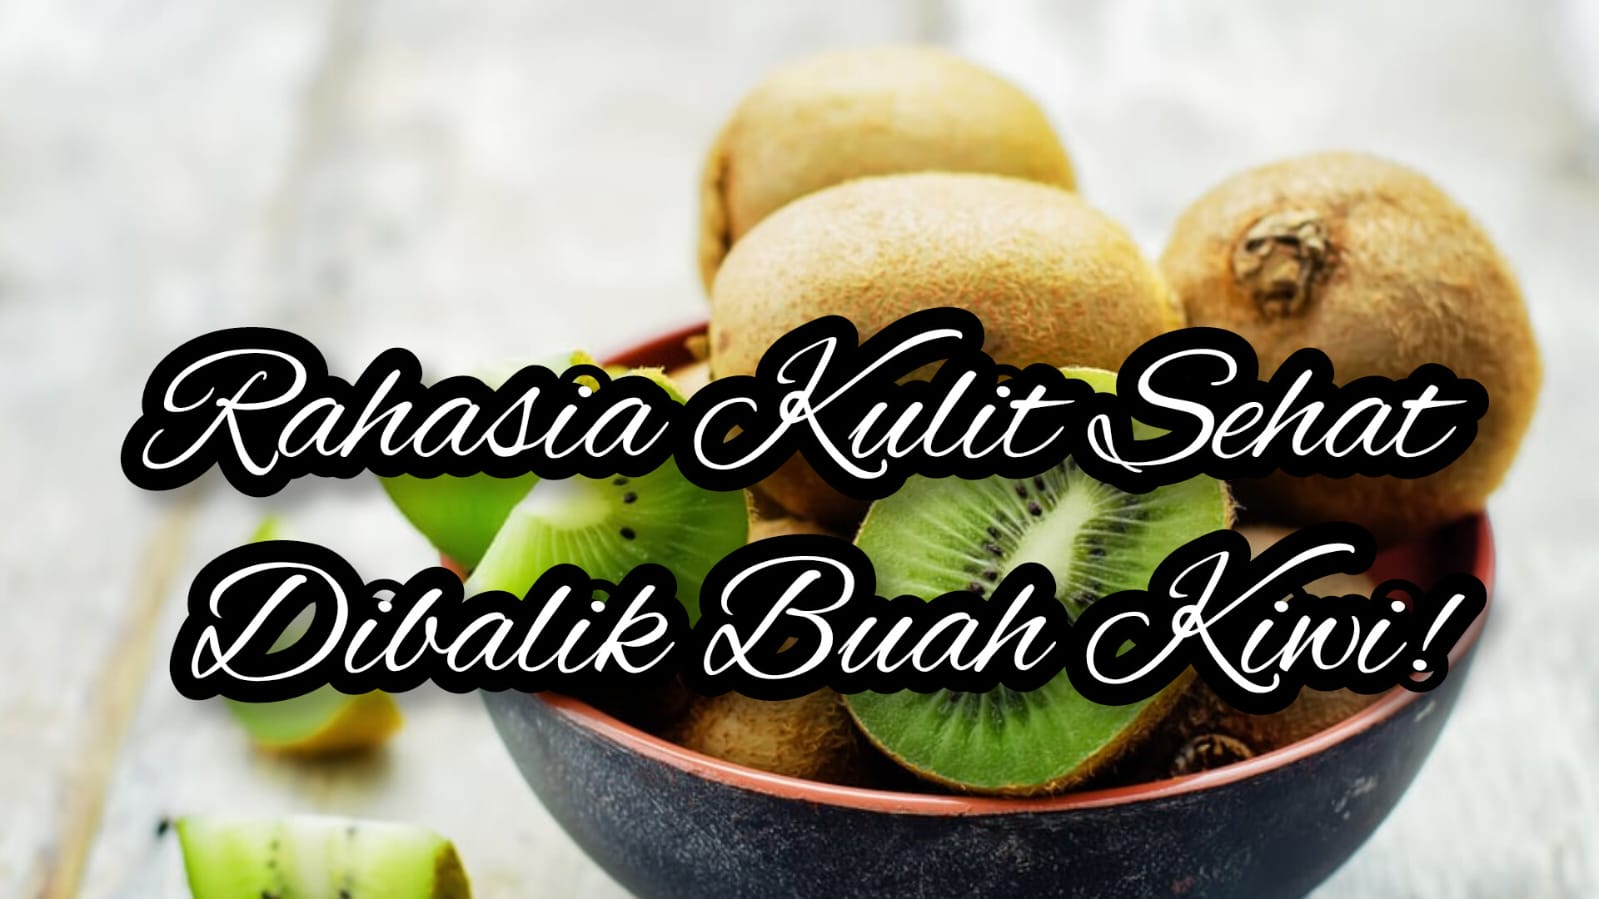 Kulit Cantik dari Dalam, Berikut 5 Cara Makan Buah Kiwi Agar Hasinya Maksimal!